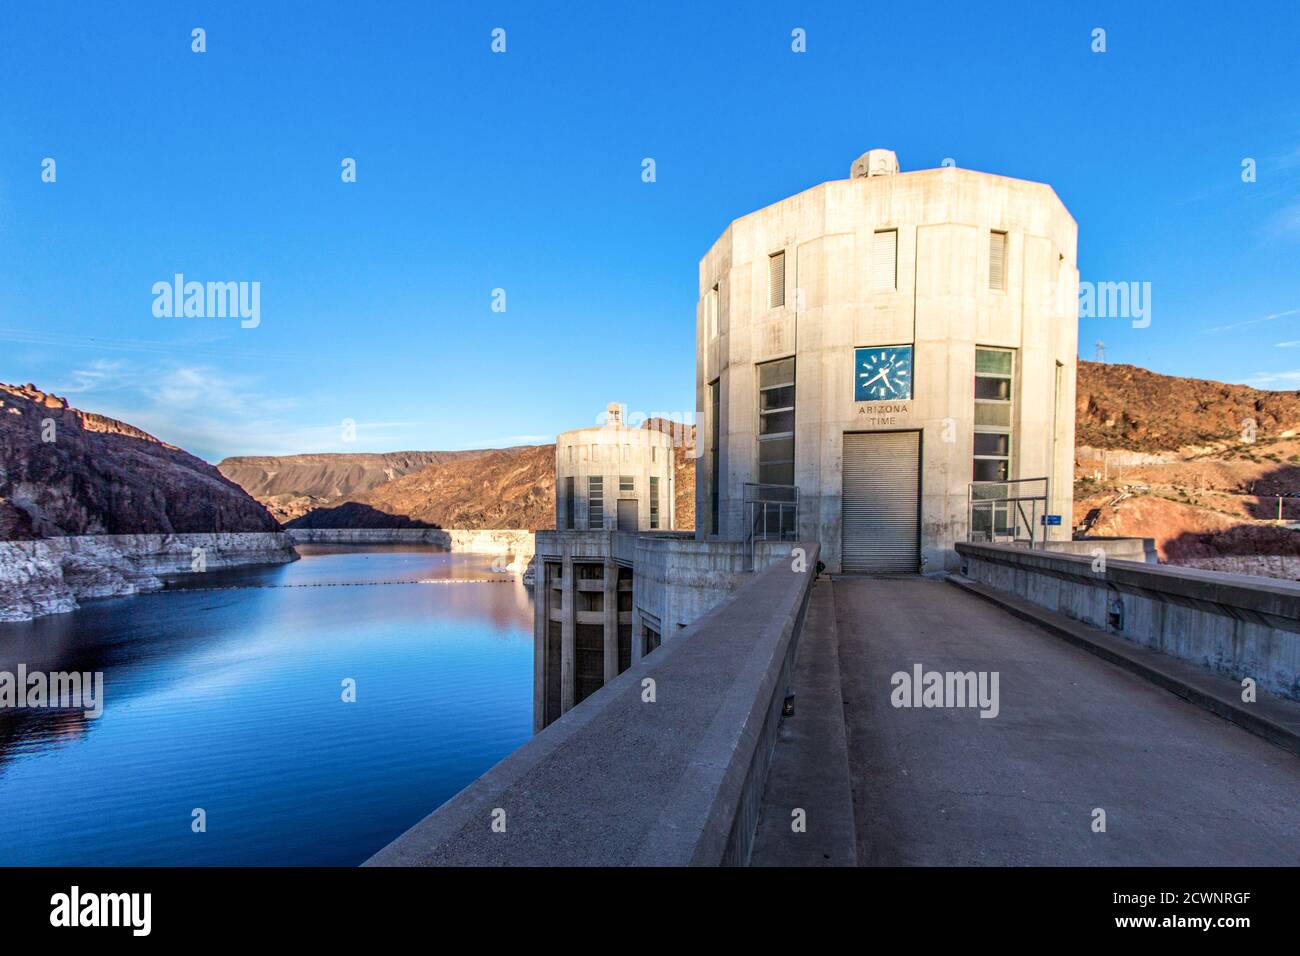 Arizona Time. Large clock displays Arizona time at the Hoover Dam on the Nevada and Arizona state border. Stock Photo